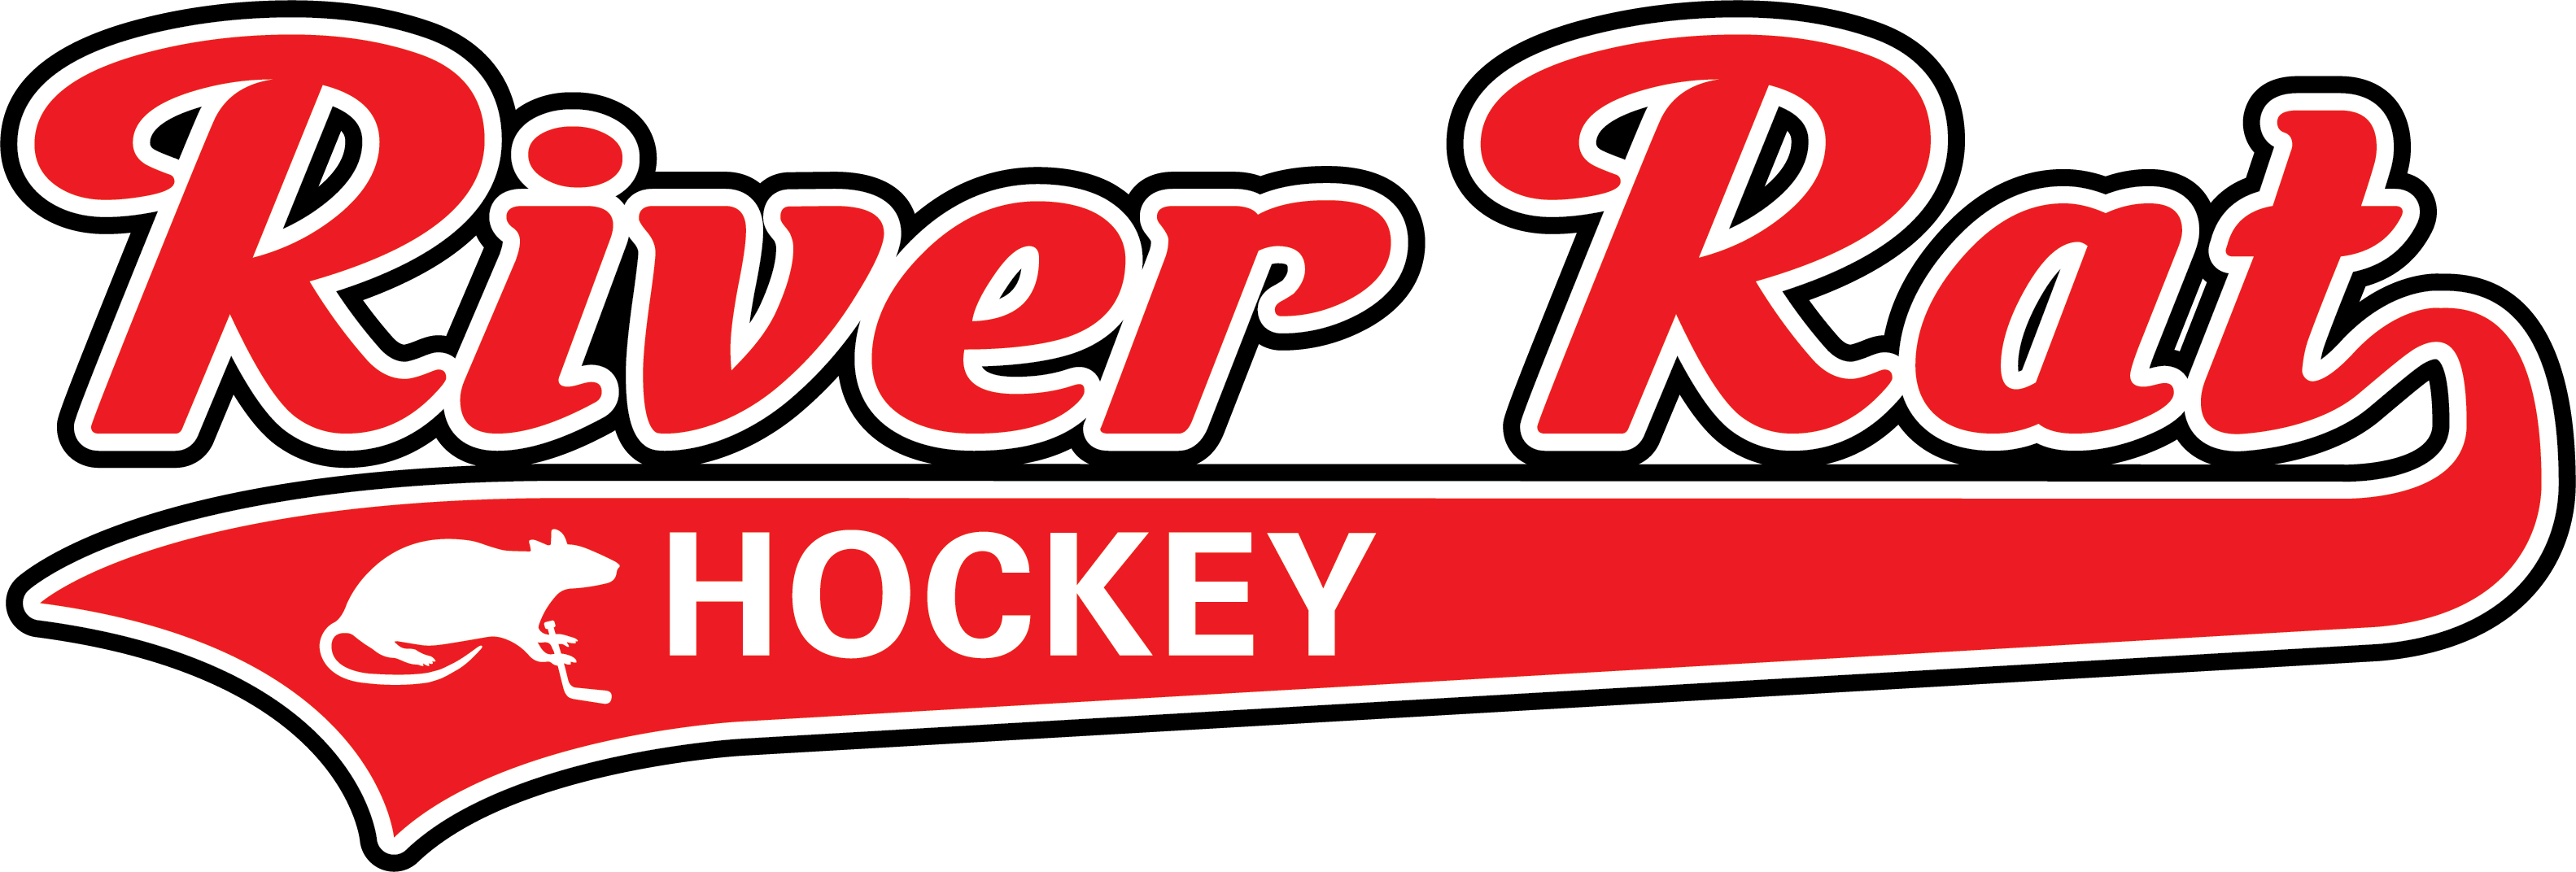 River Rat Hockey